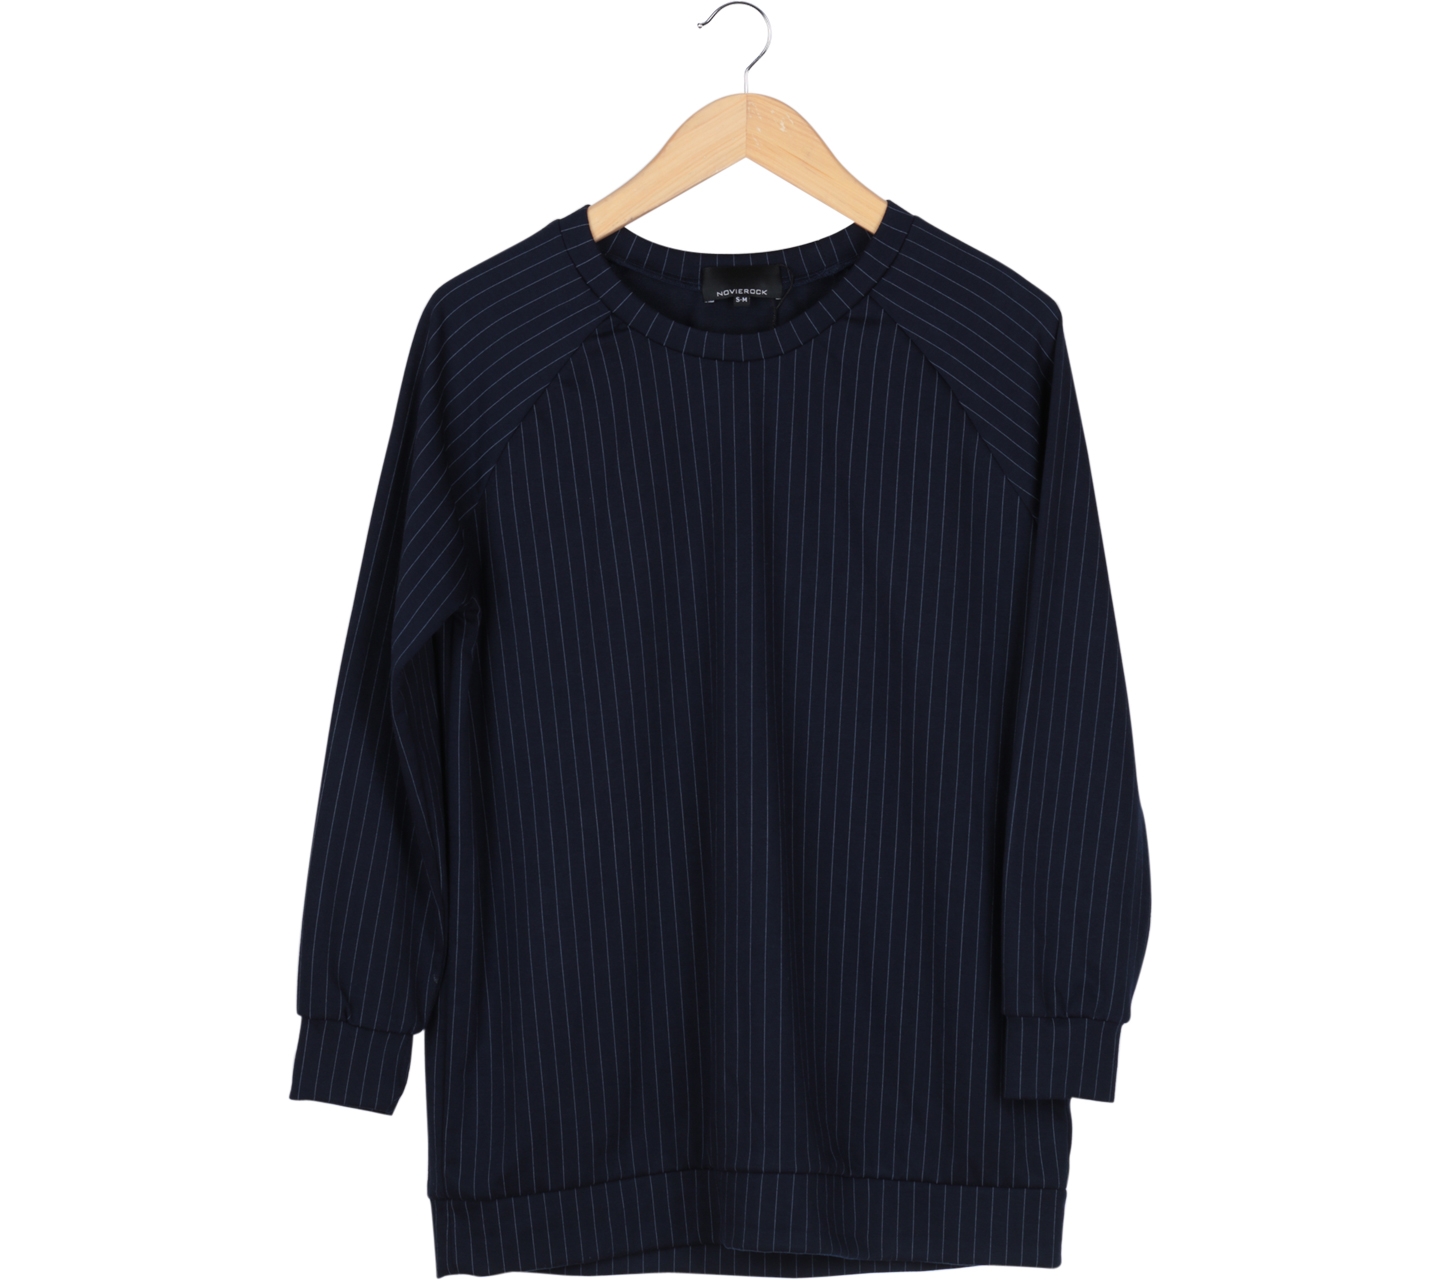 Novierock Dark Blue Striped Sweater